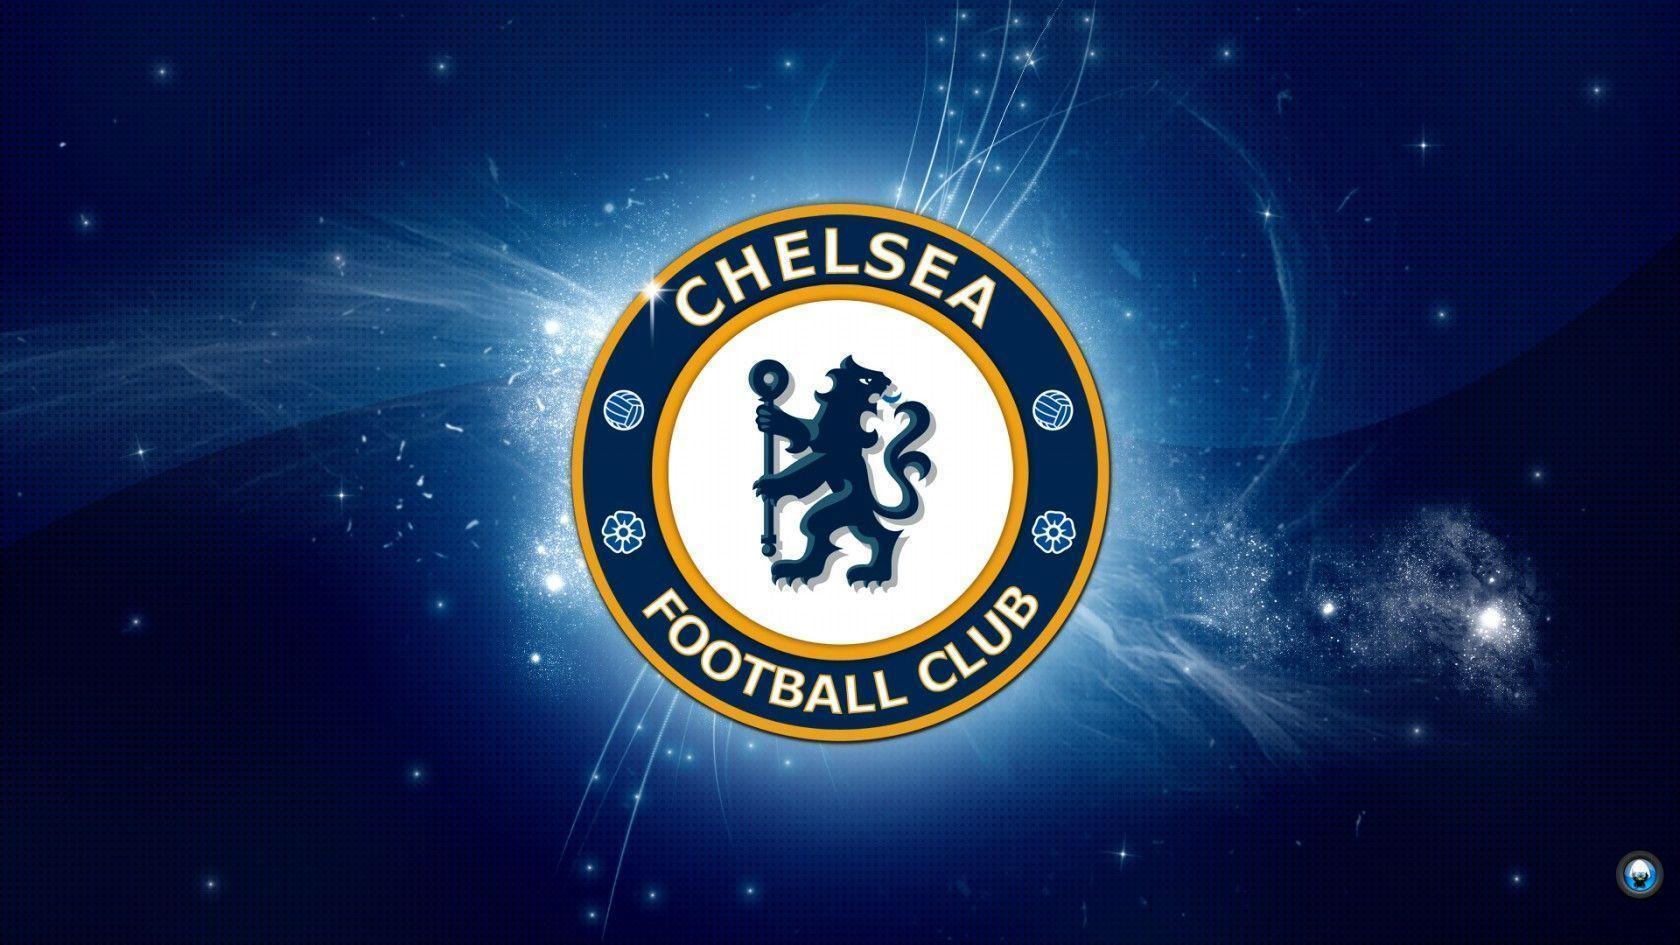 Chelsea FC Logo 2013 HD Wallpaper of Football